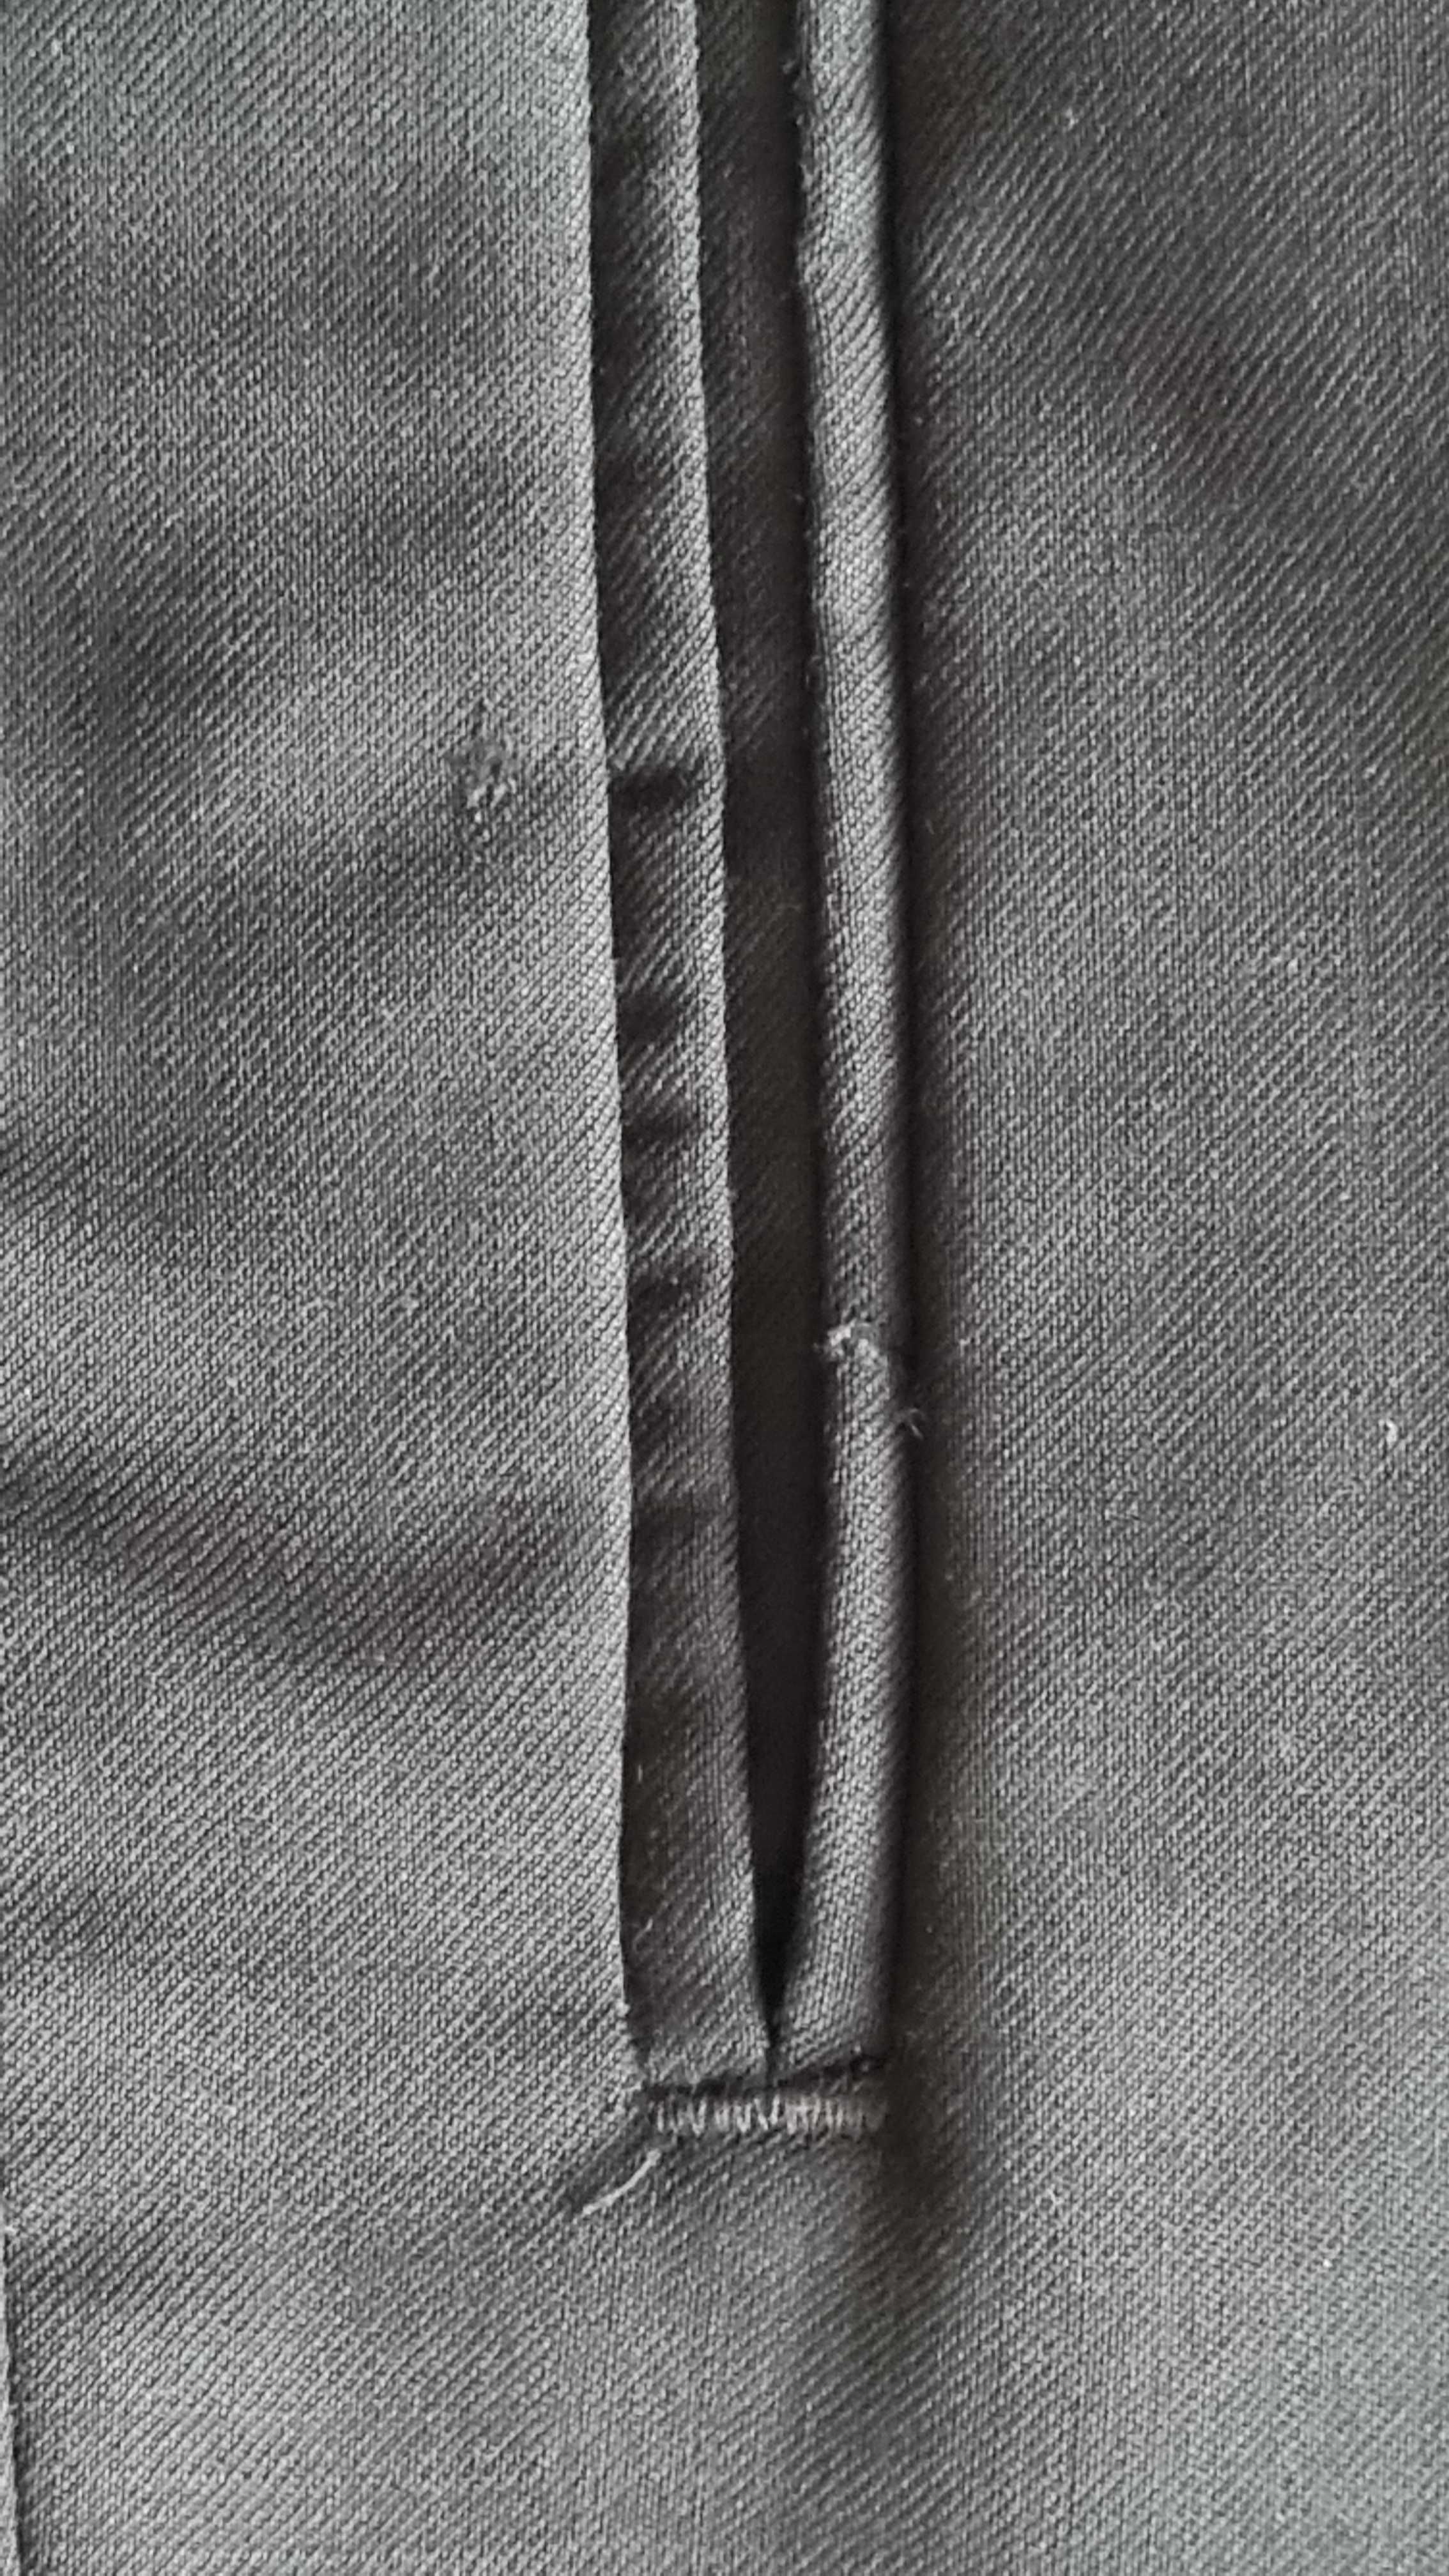 Spodnie vintage ciemny granat Brax Delano 100% wełna rozm. 52